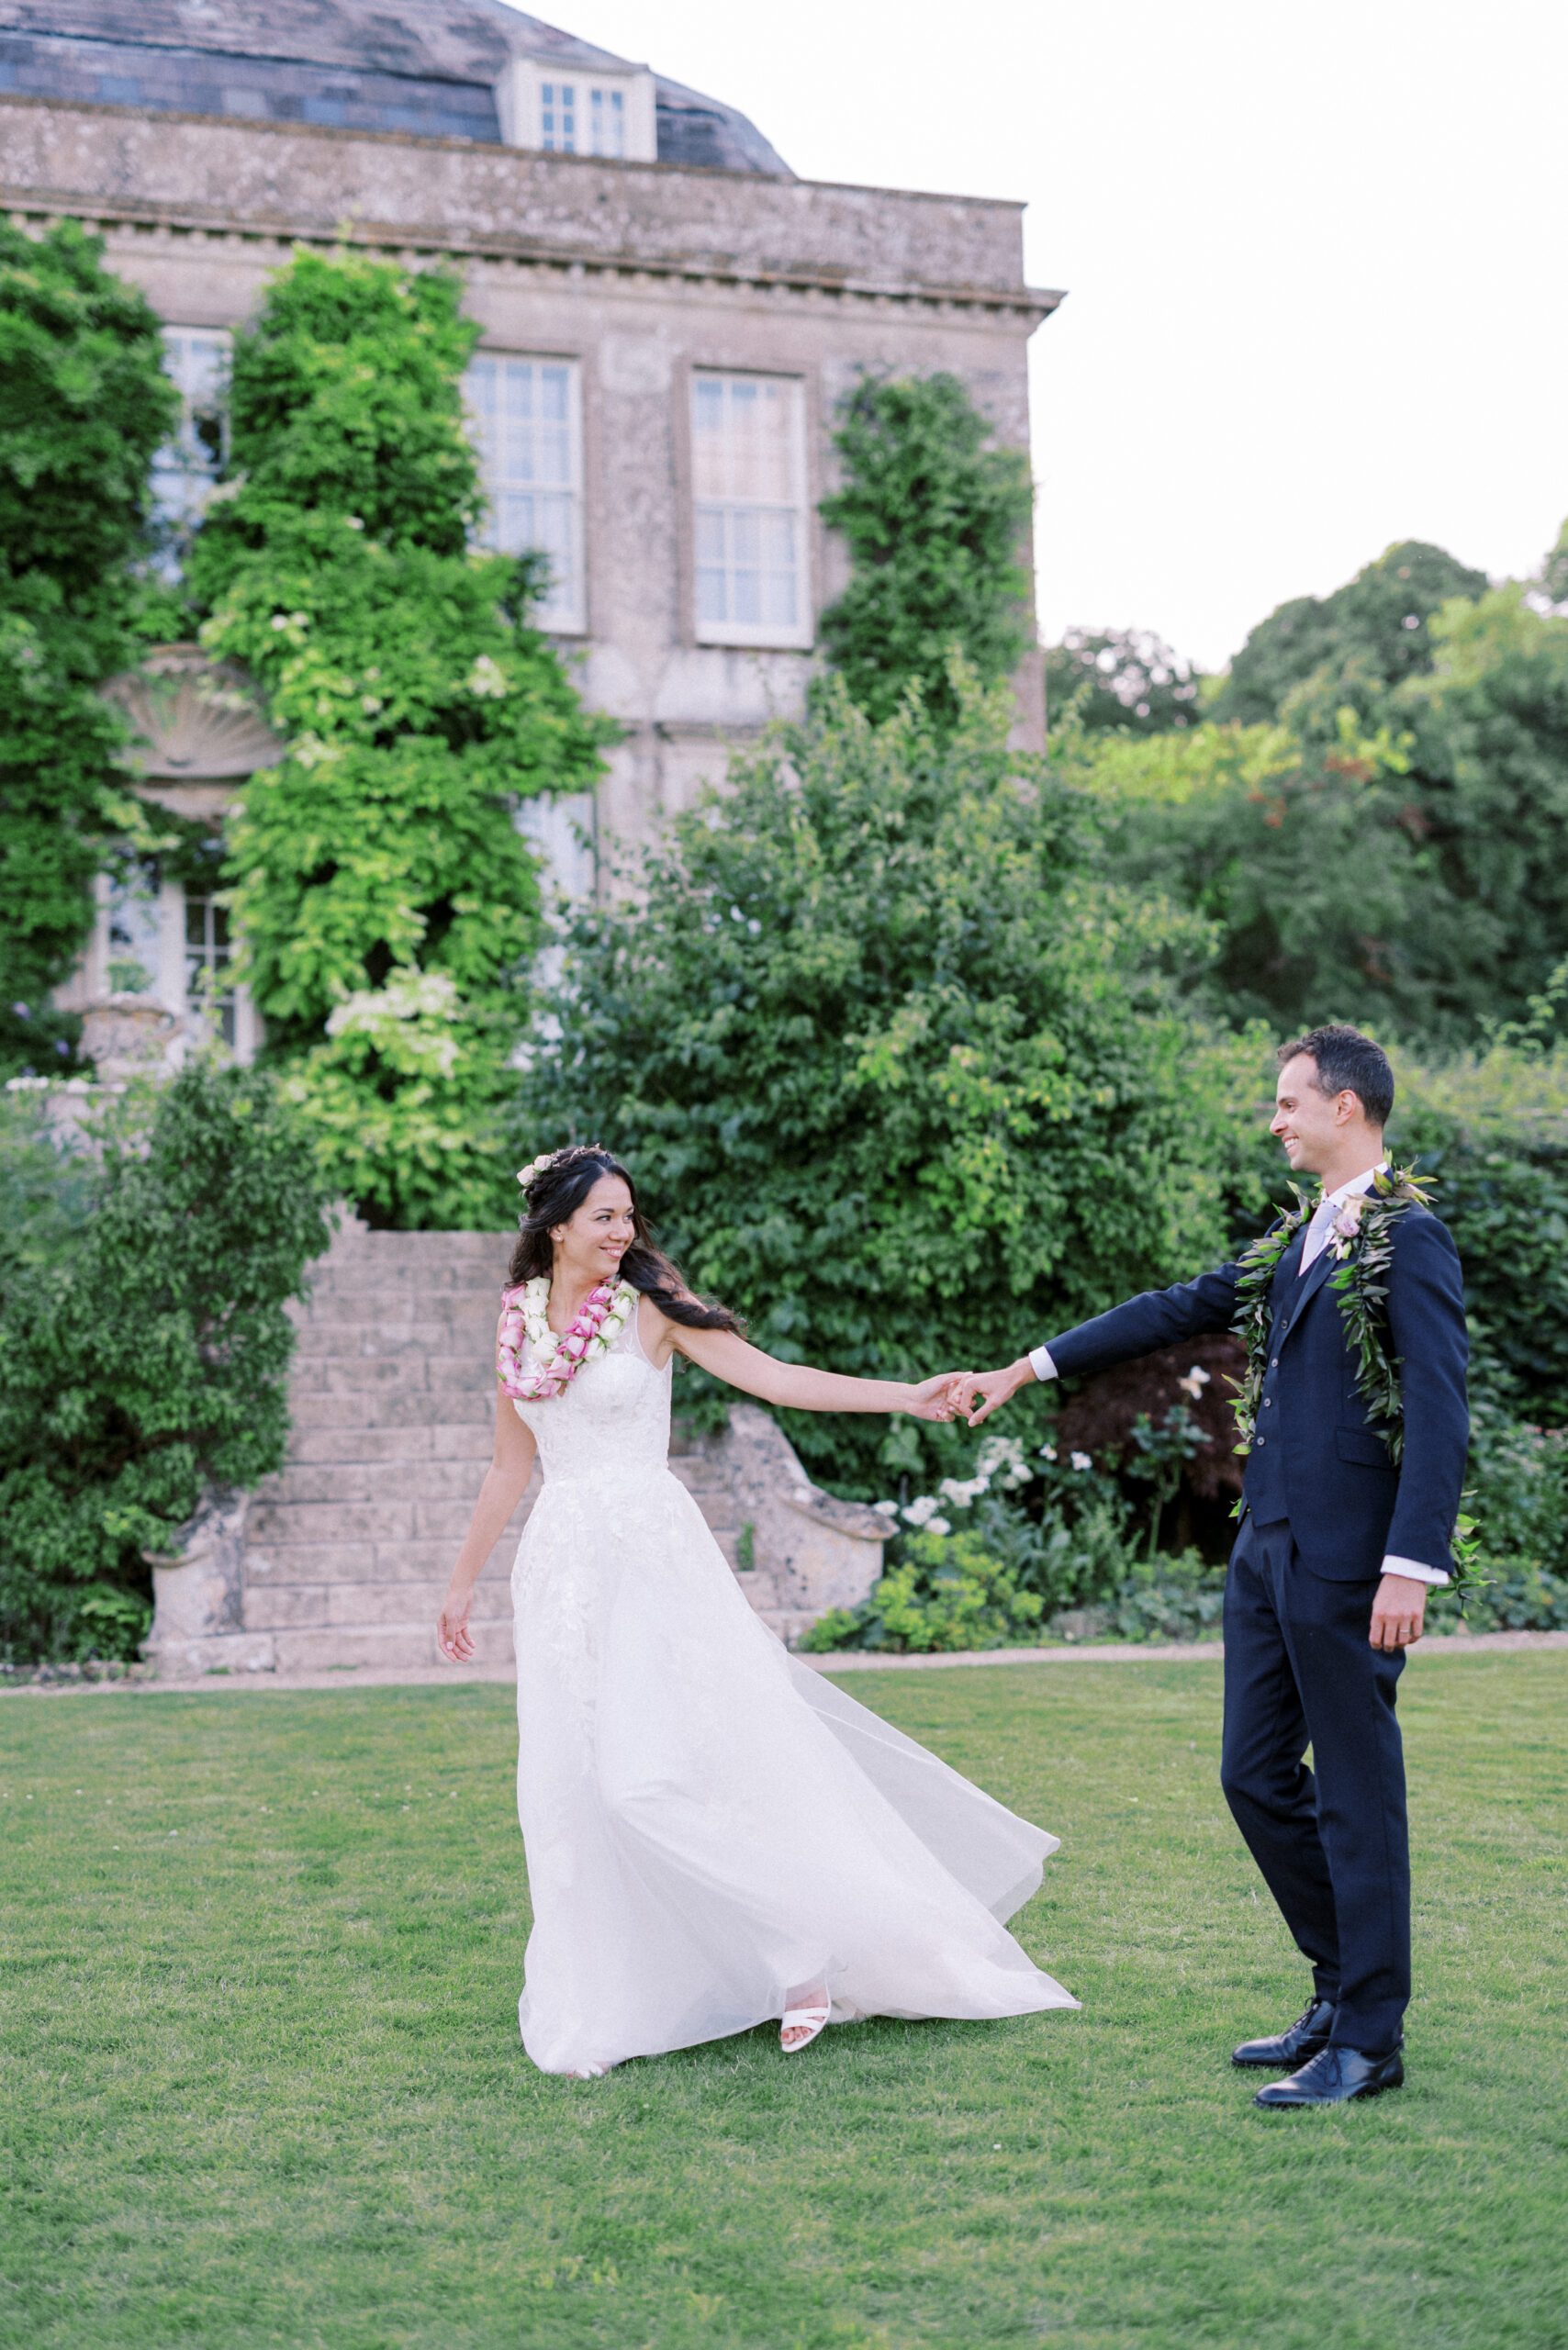 Romantic & Elegant Wedding Photography at Hamswell House in Bath